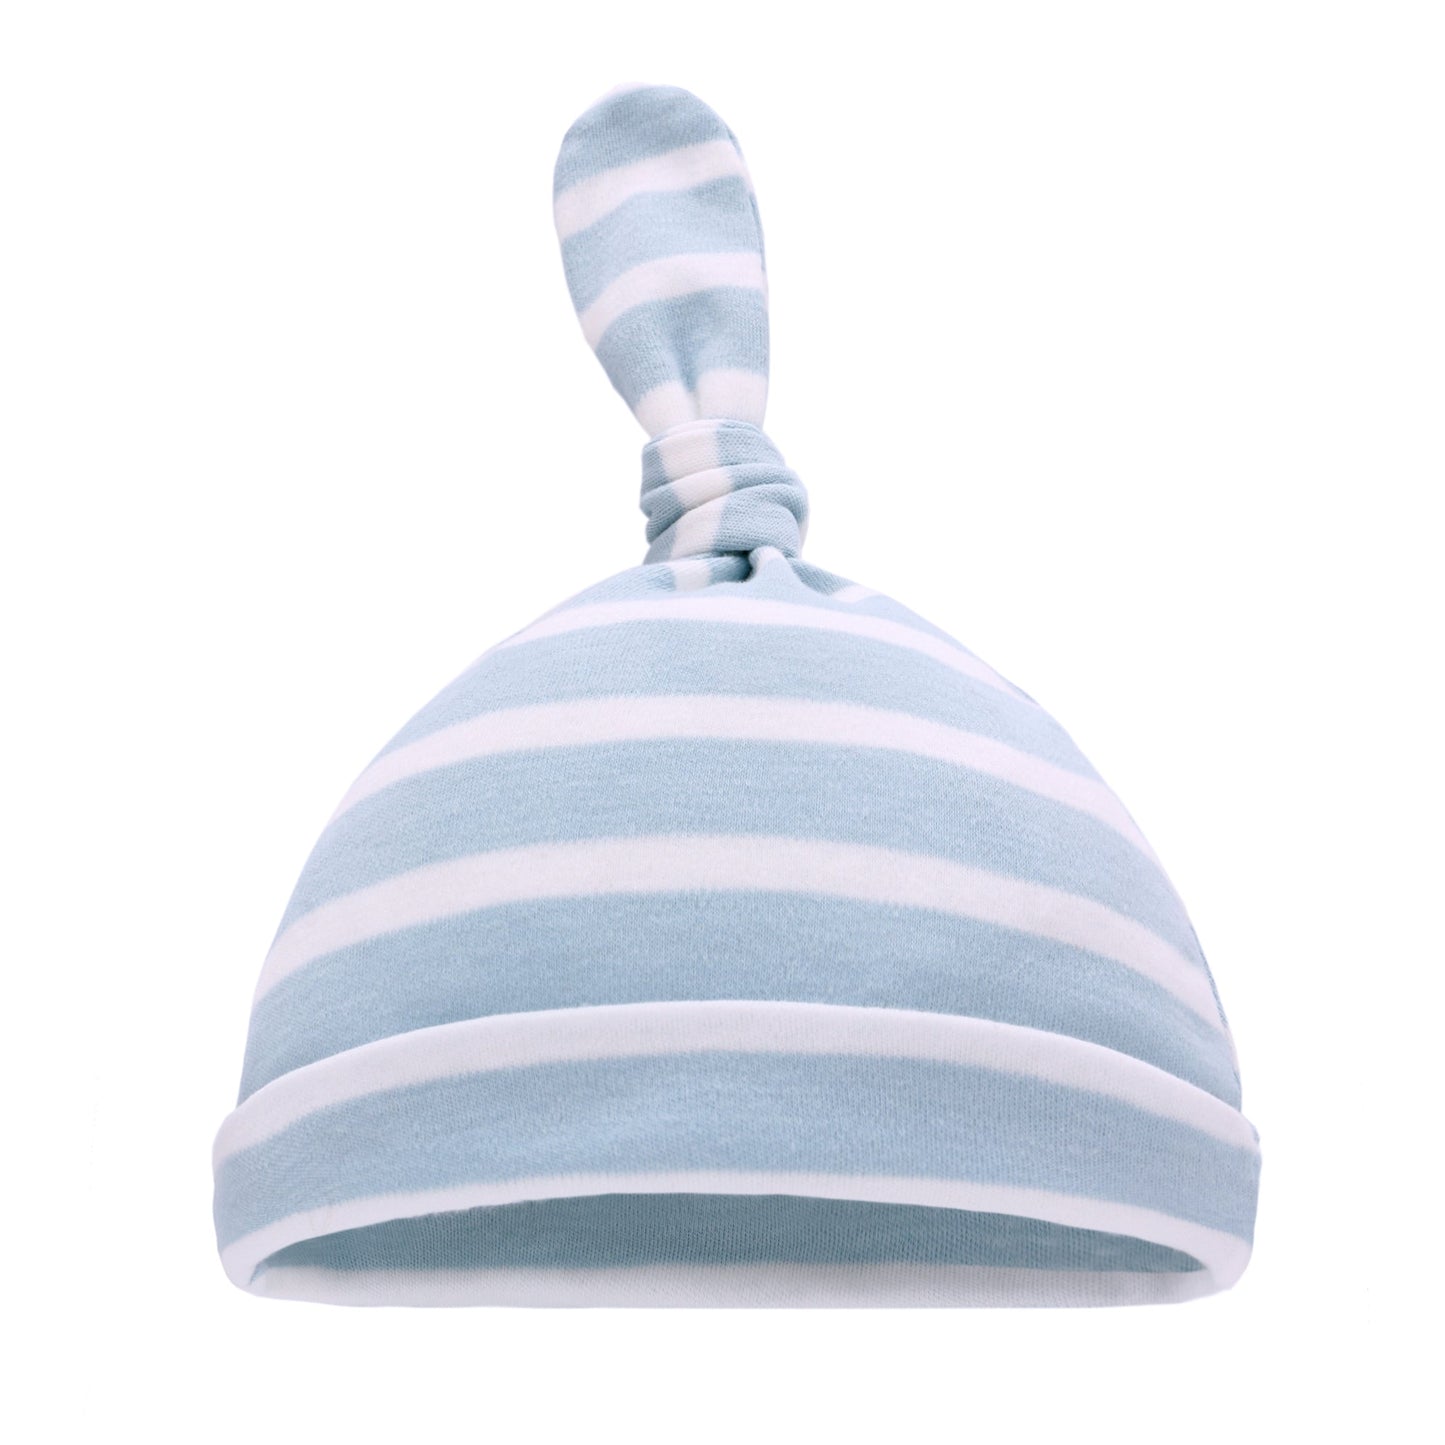 Blue Stripes Baby Boy - Gift Box